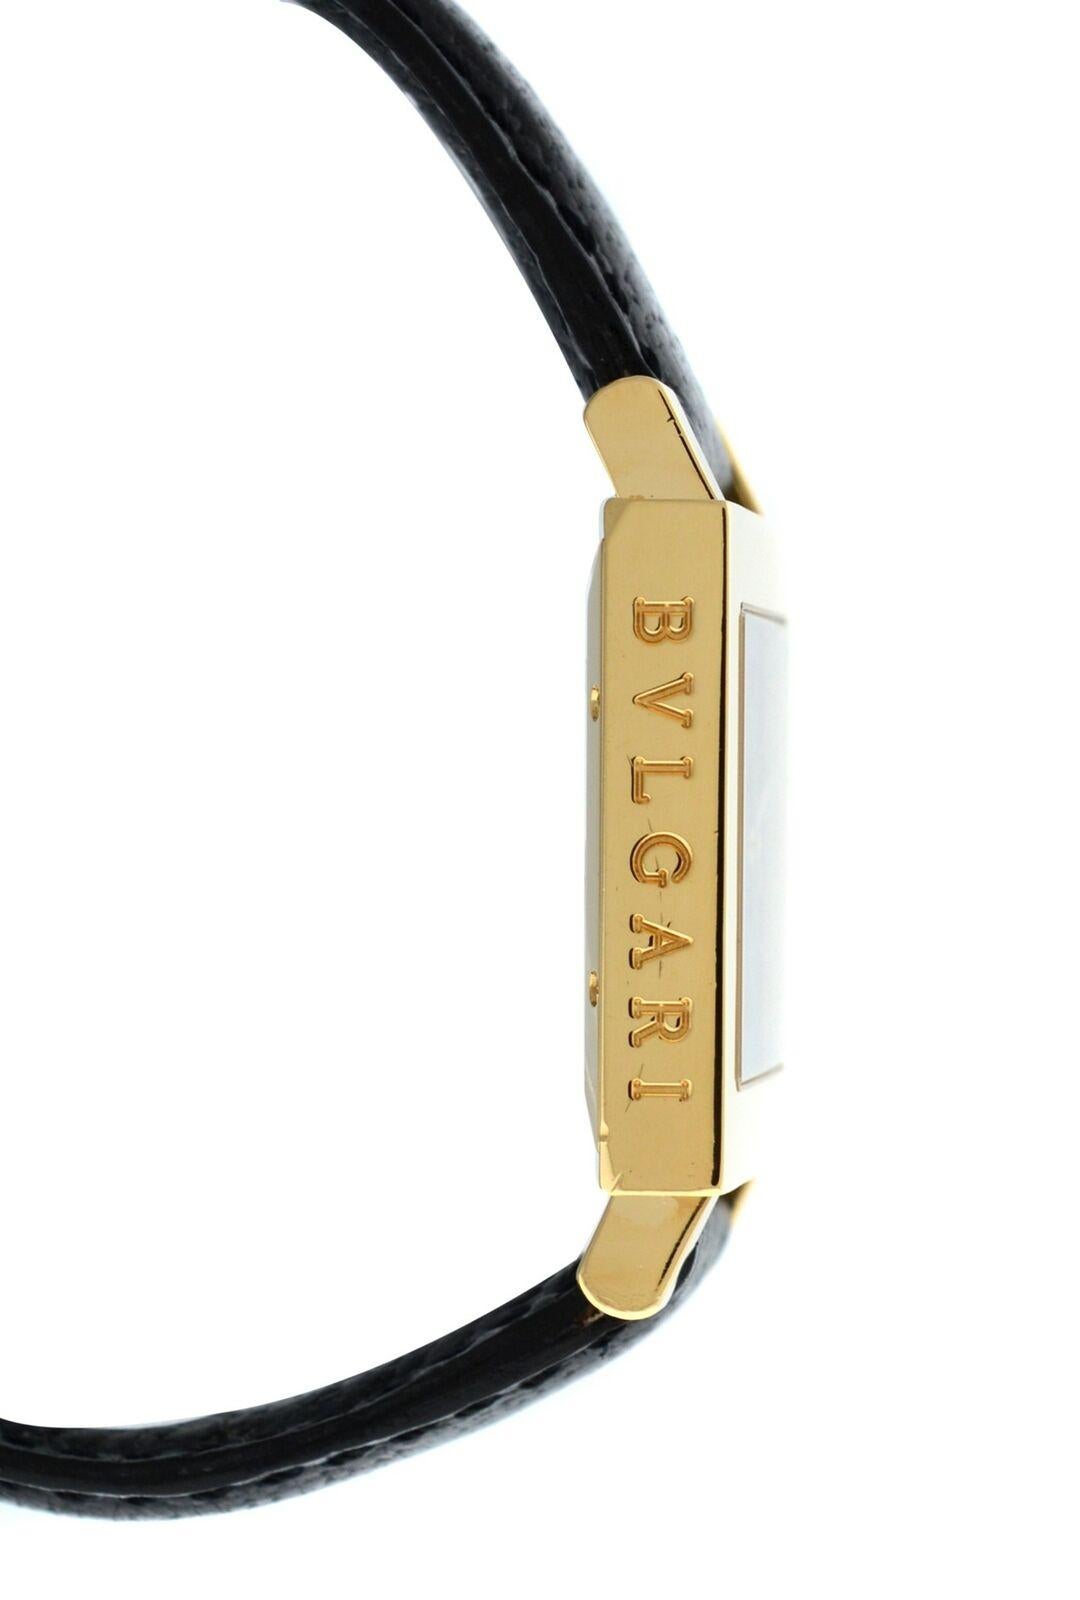 Unisex Bvlgari Bulgari Quadrato SQ 29 GL AUTO 18 Karat Gold Watch In Excellent Condition For Sale In New York, NY